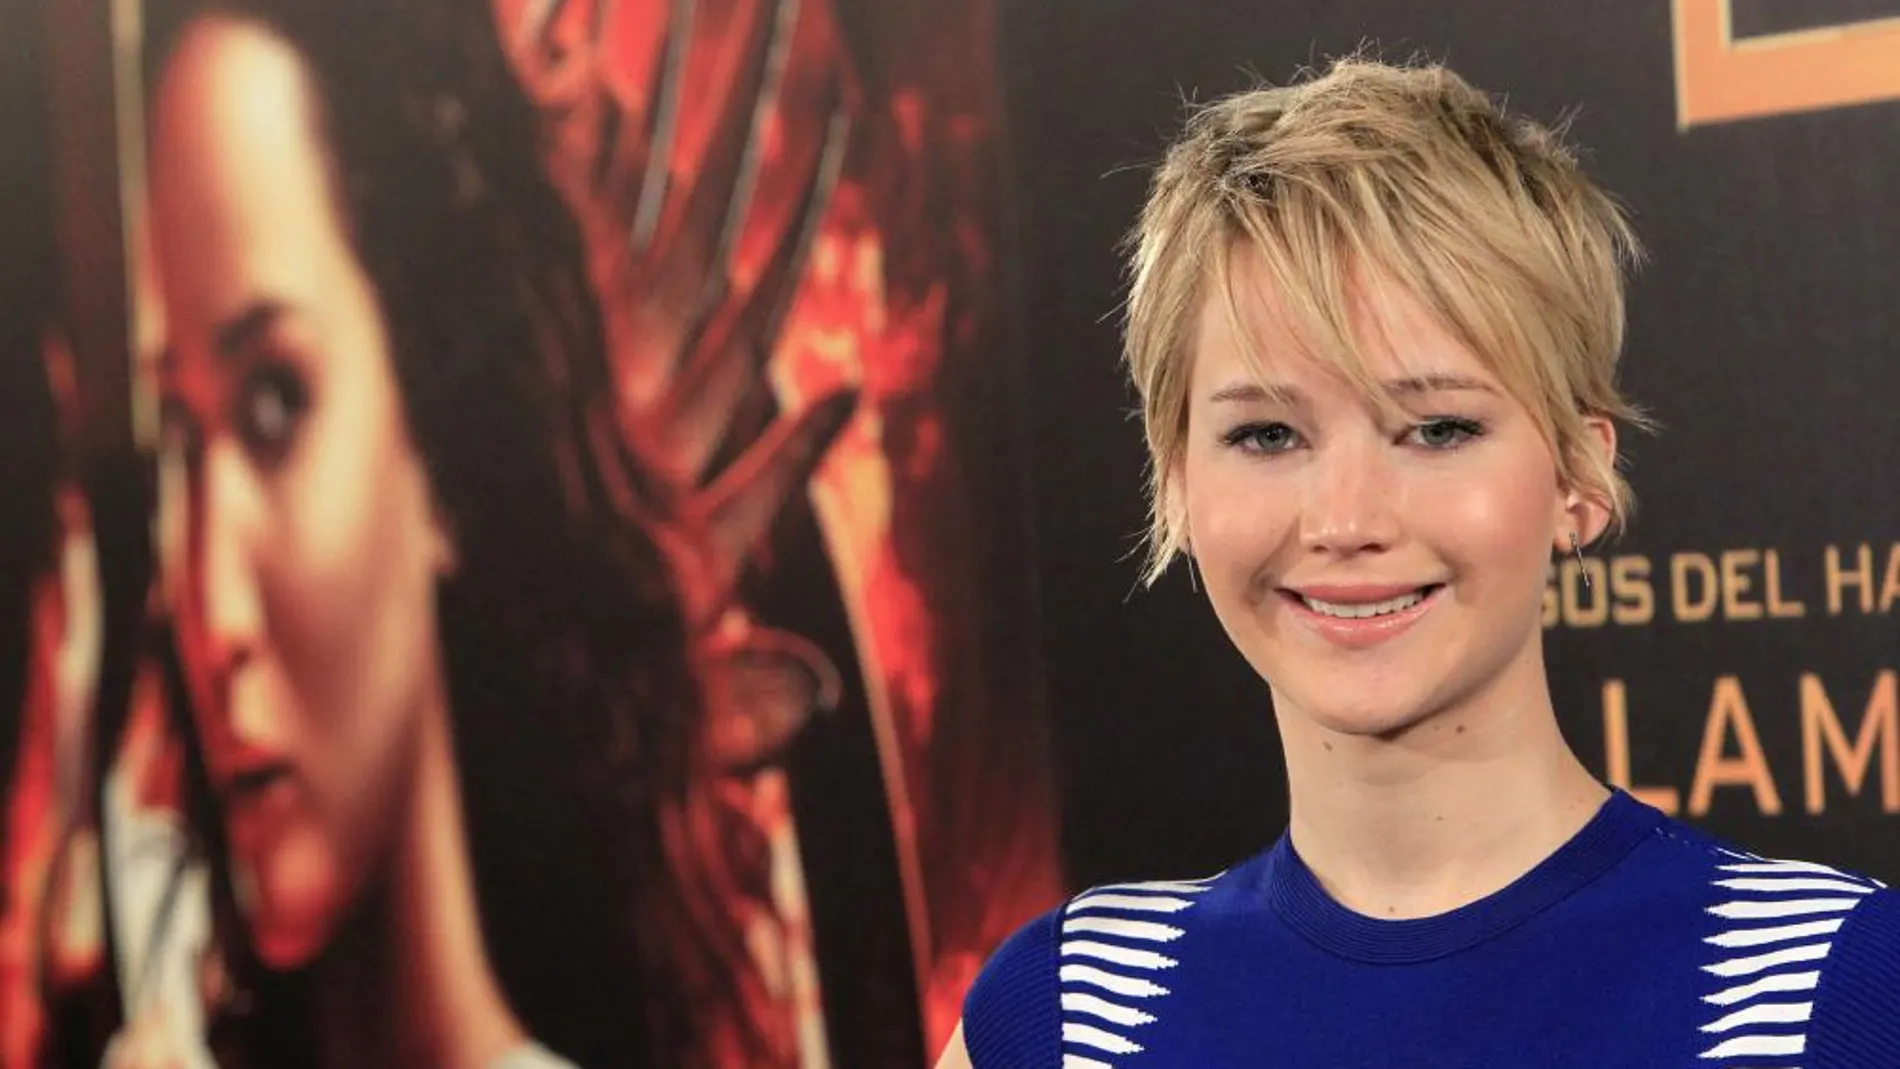 La actriz Jennifer Lawrence que interpreta a Katniss Everdeen